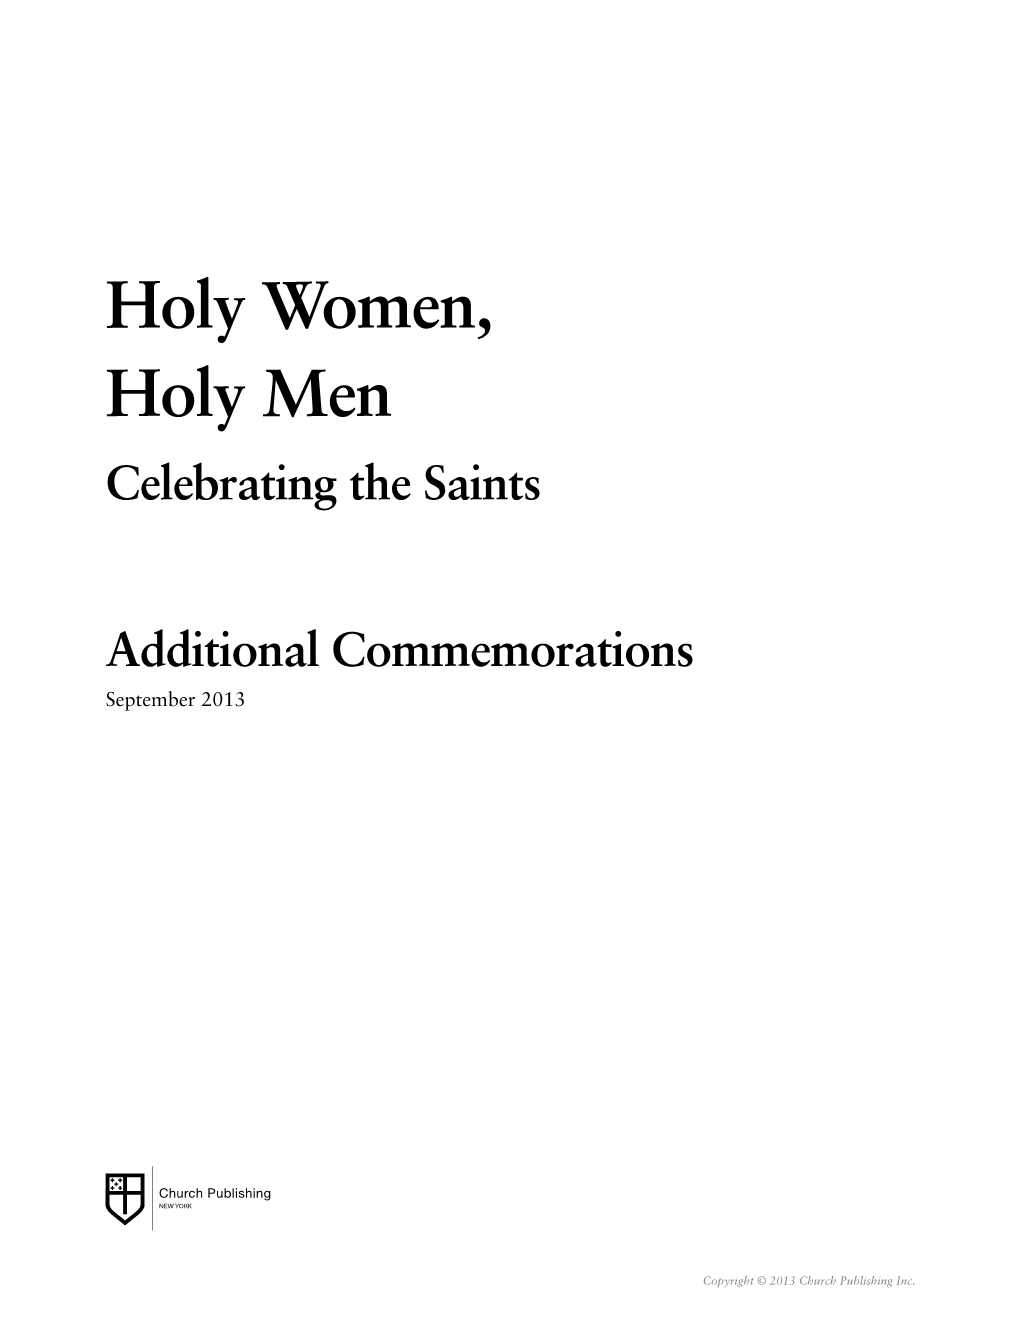 Holy Women, Holy Men Celebrating the Saints